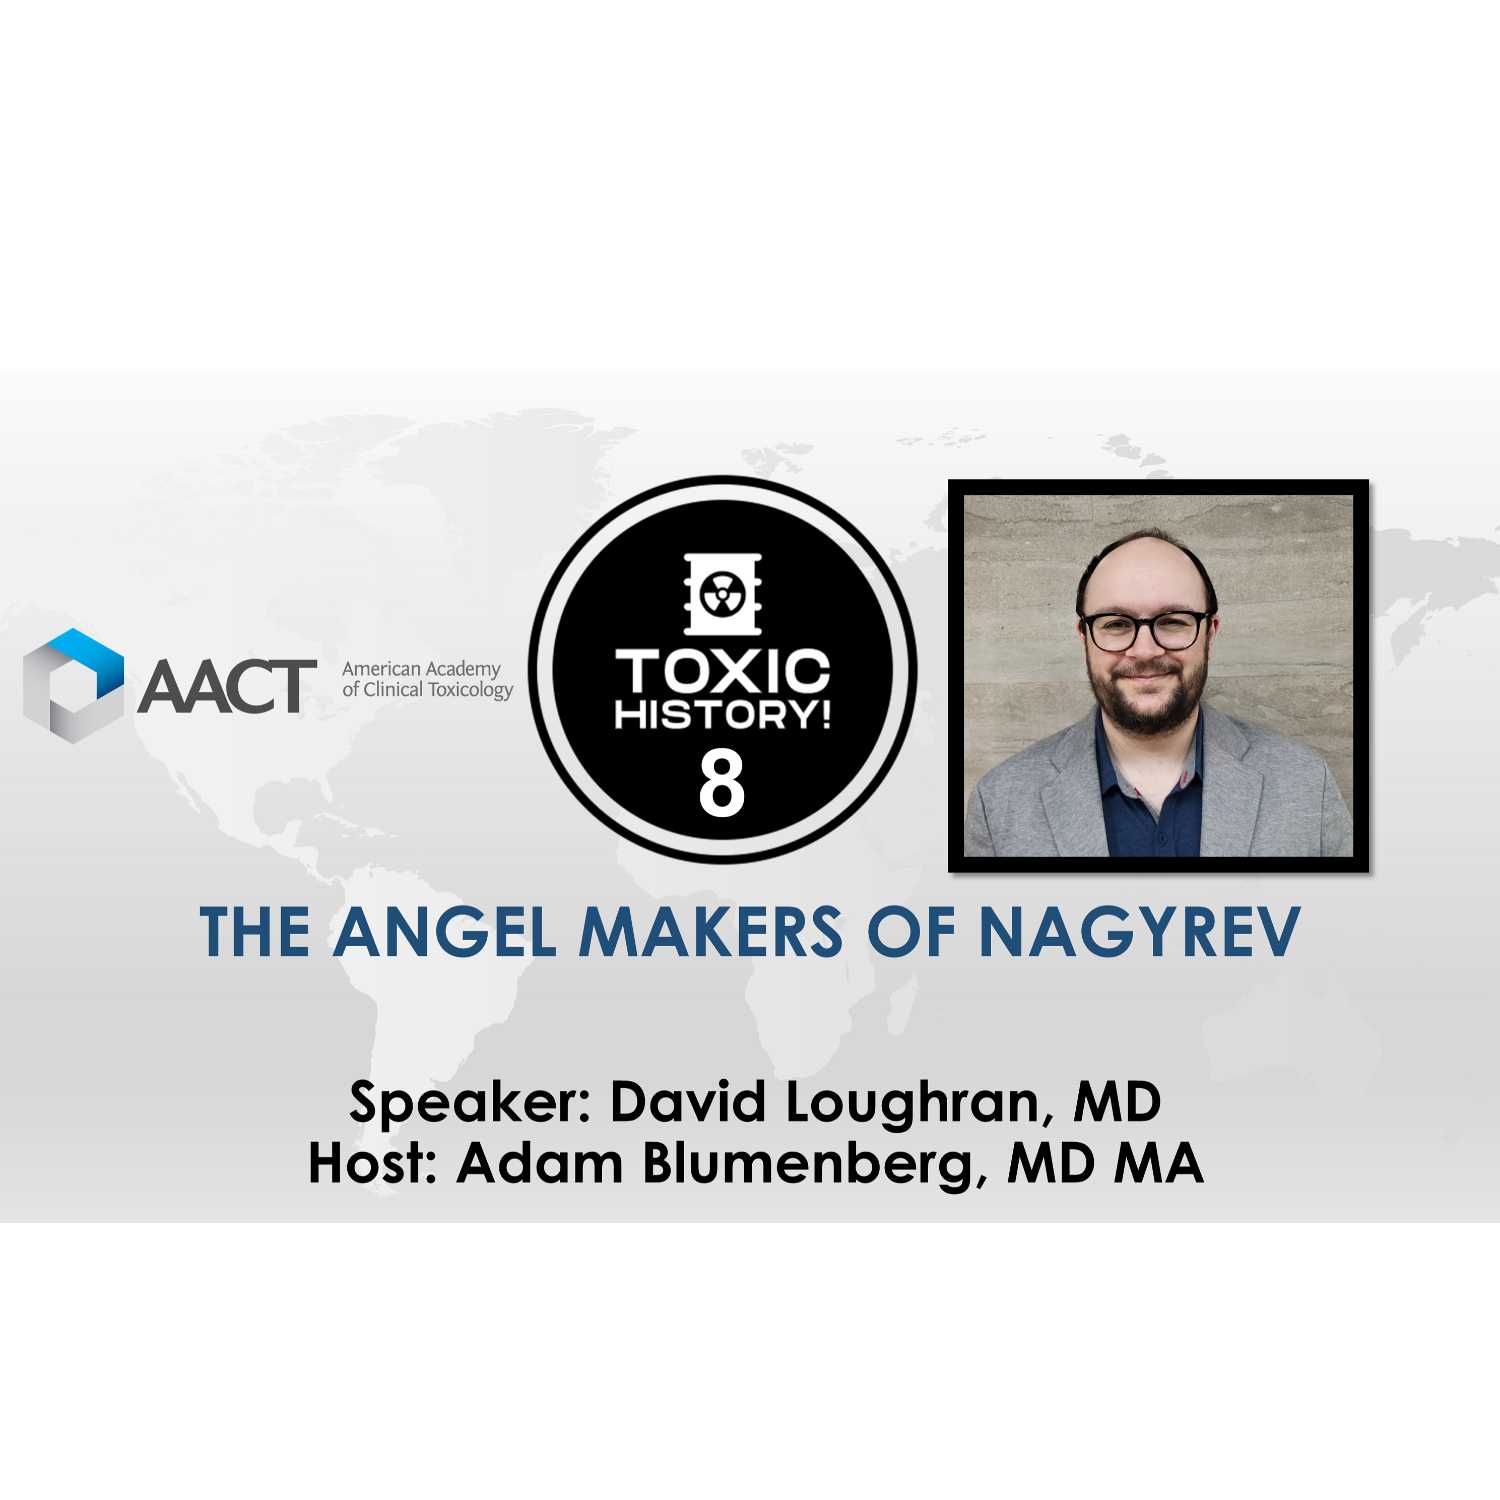 The Angel Makers of Nagyrev